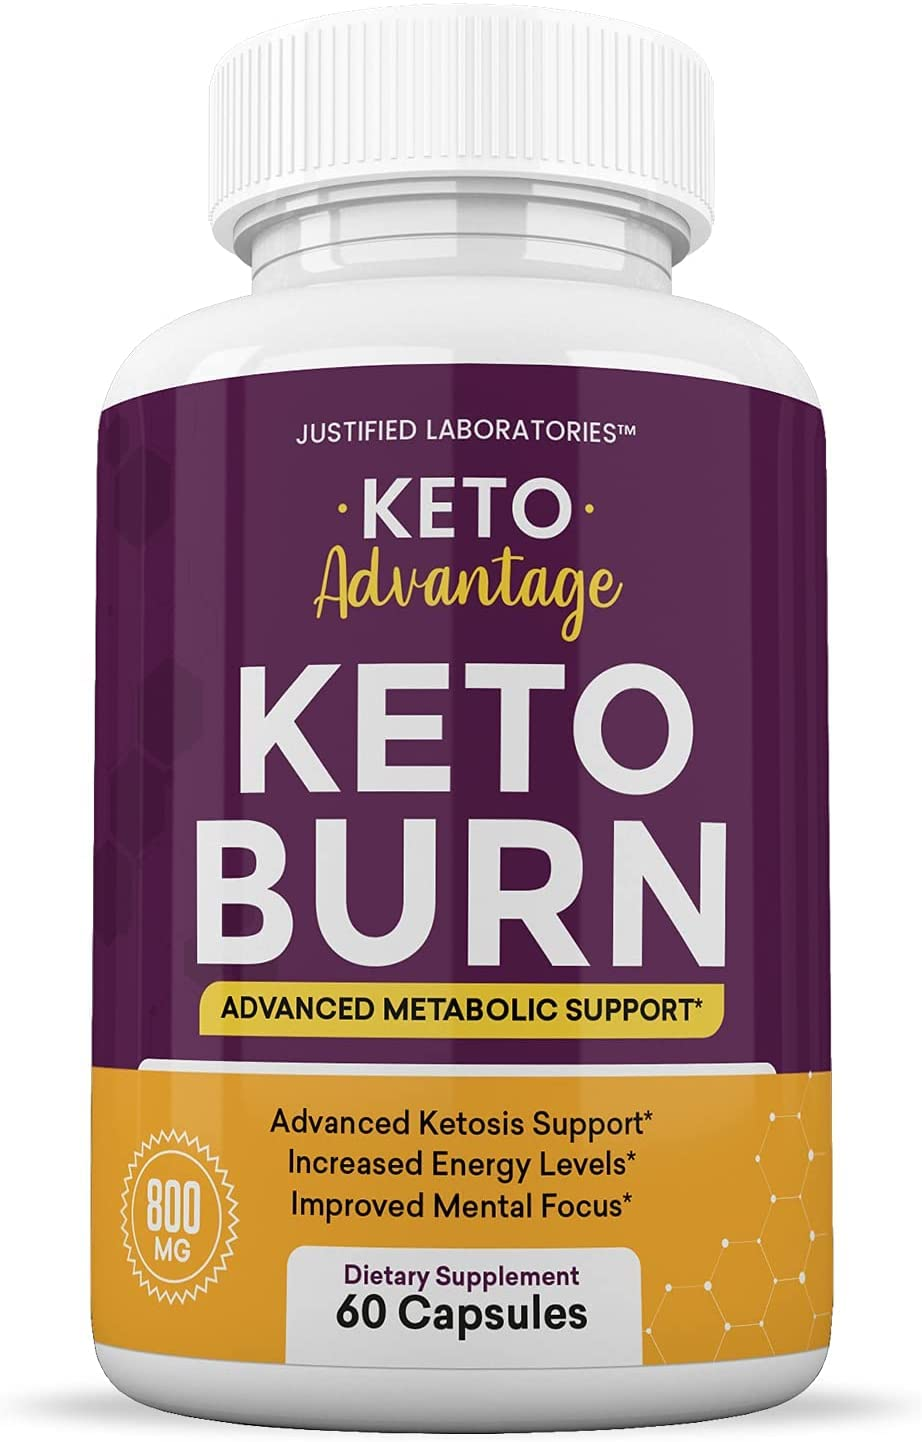 Keto Advantage Keto Burn Pills Includes Apple Cider Vinegar Gobhb Exogenous Ketones Advanced Ketogenic Supplement Ketosis Support for Men Women 60 Capsules